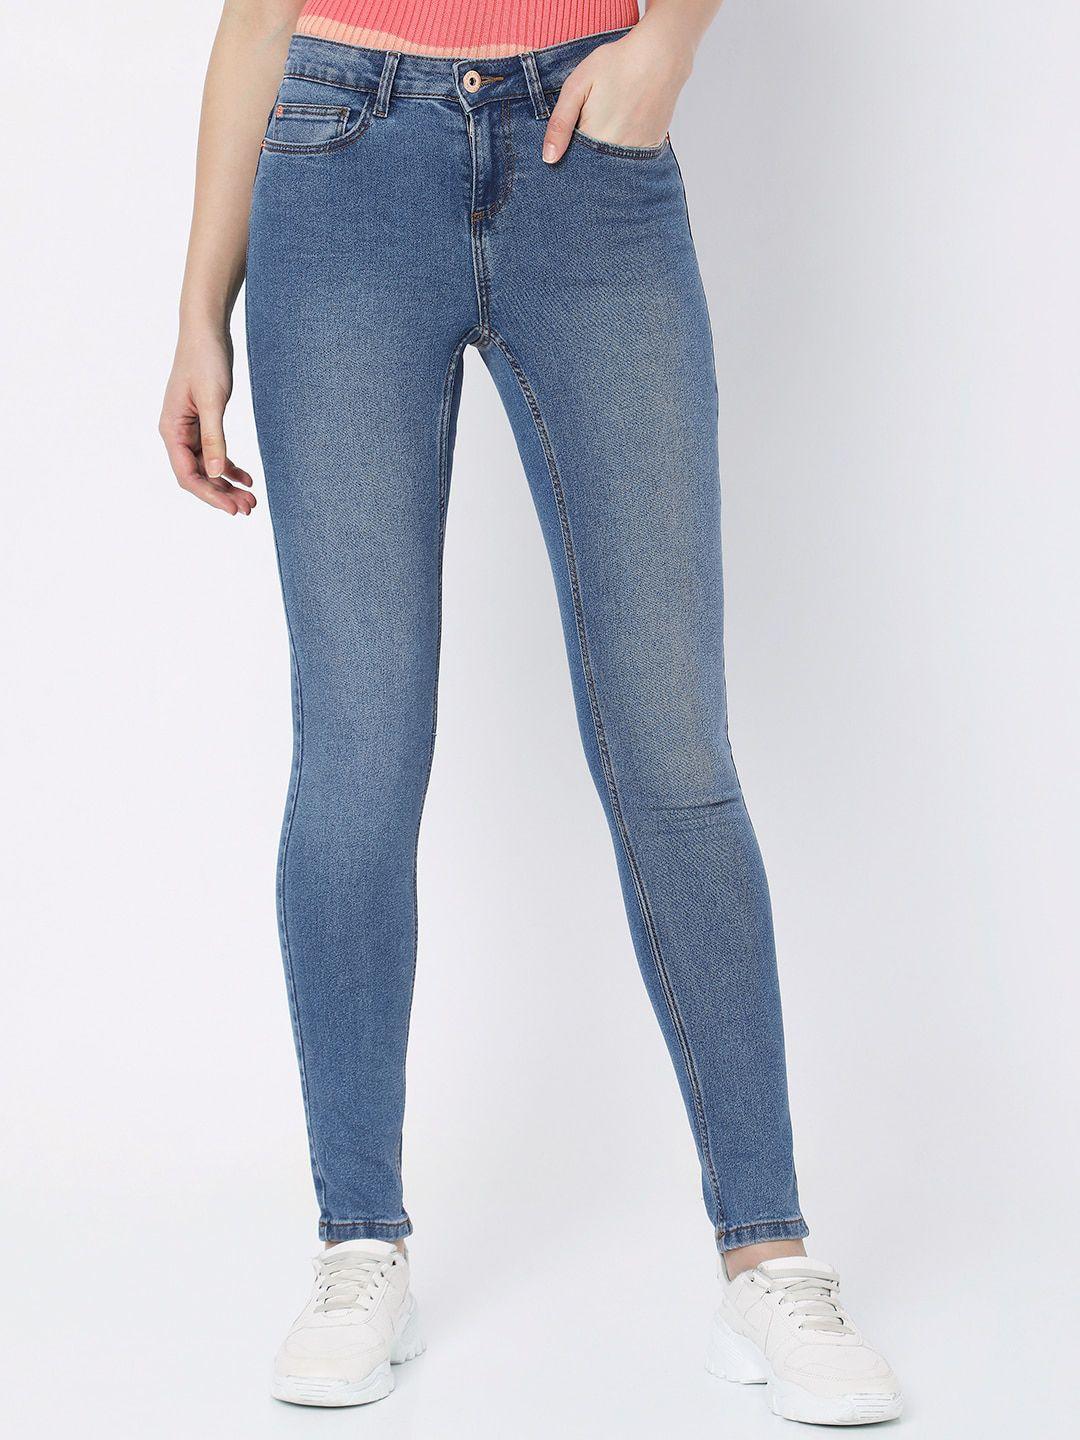 Vero Moda Women Blue Heavy Fade Stretchable Jeans